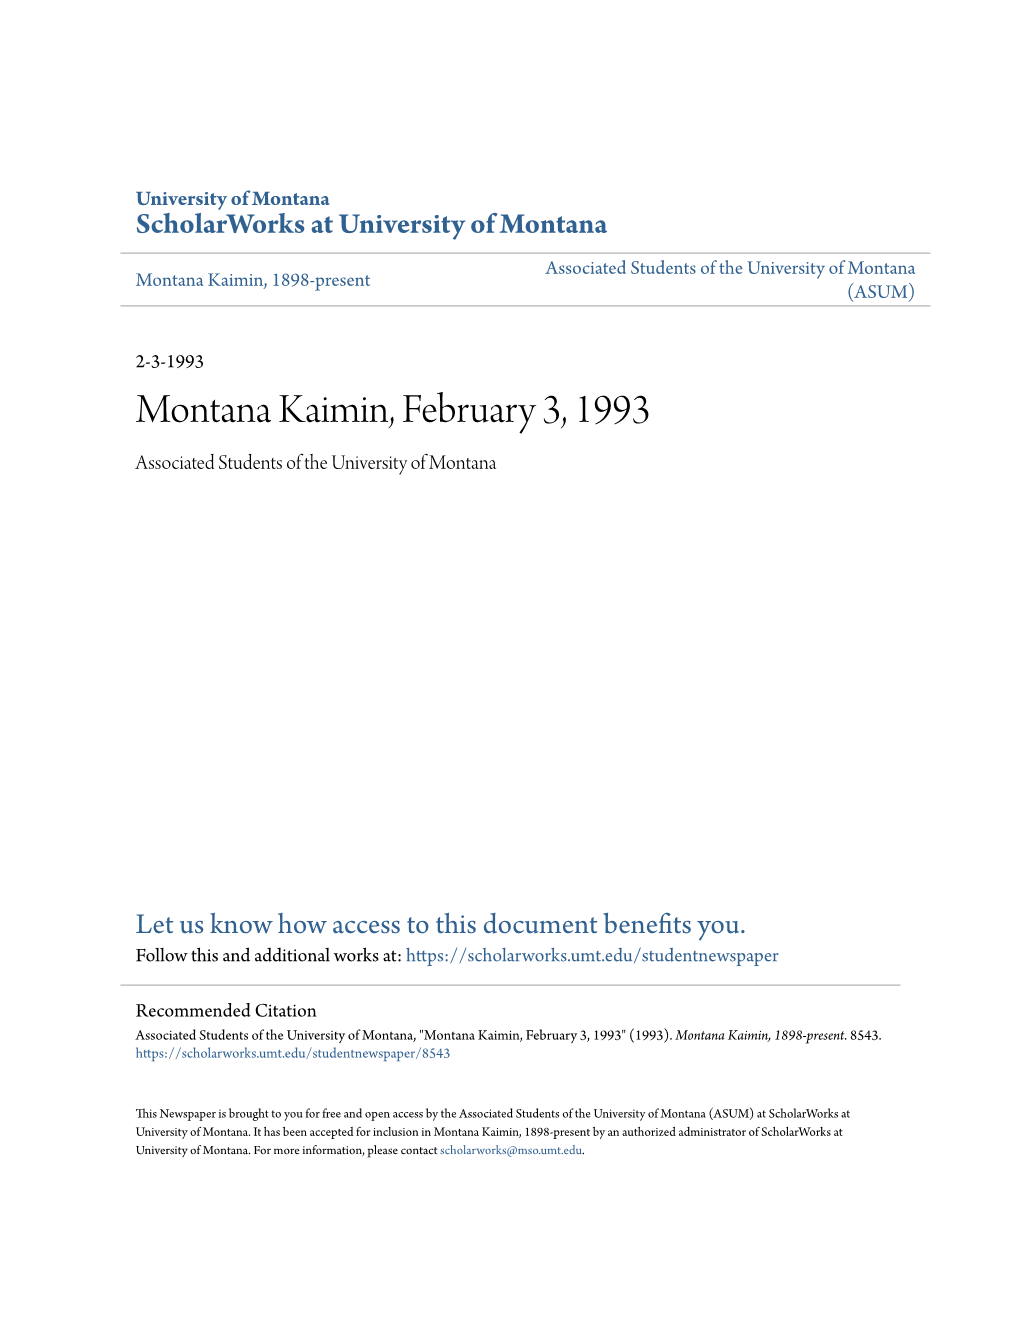 Montana Kaimin, February 3, 1993 Associated Students of the University of Montana